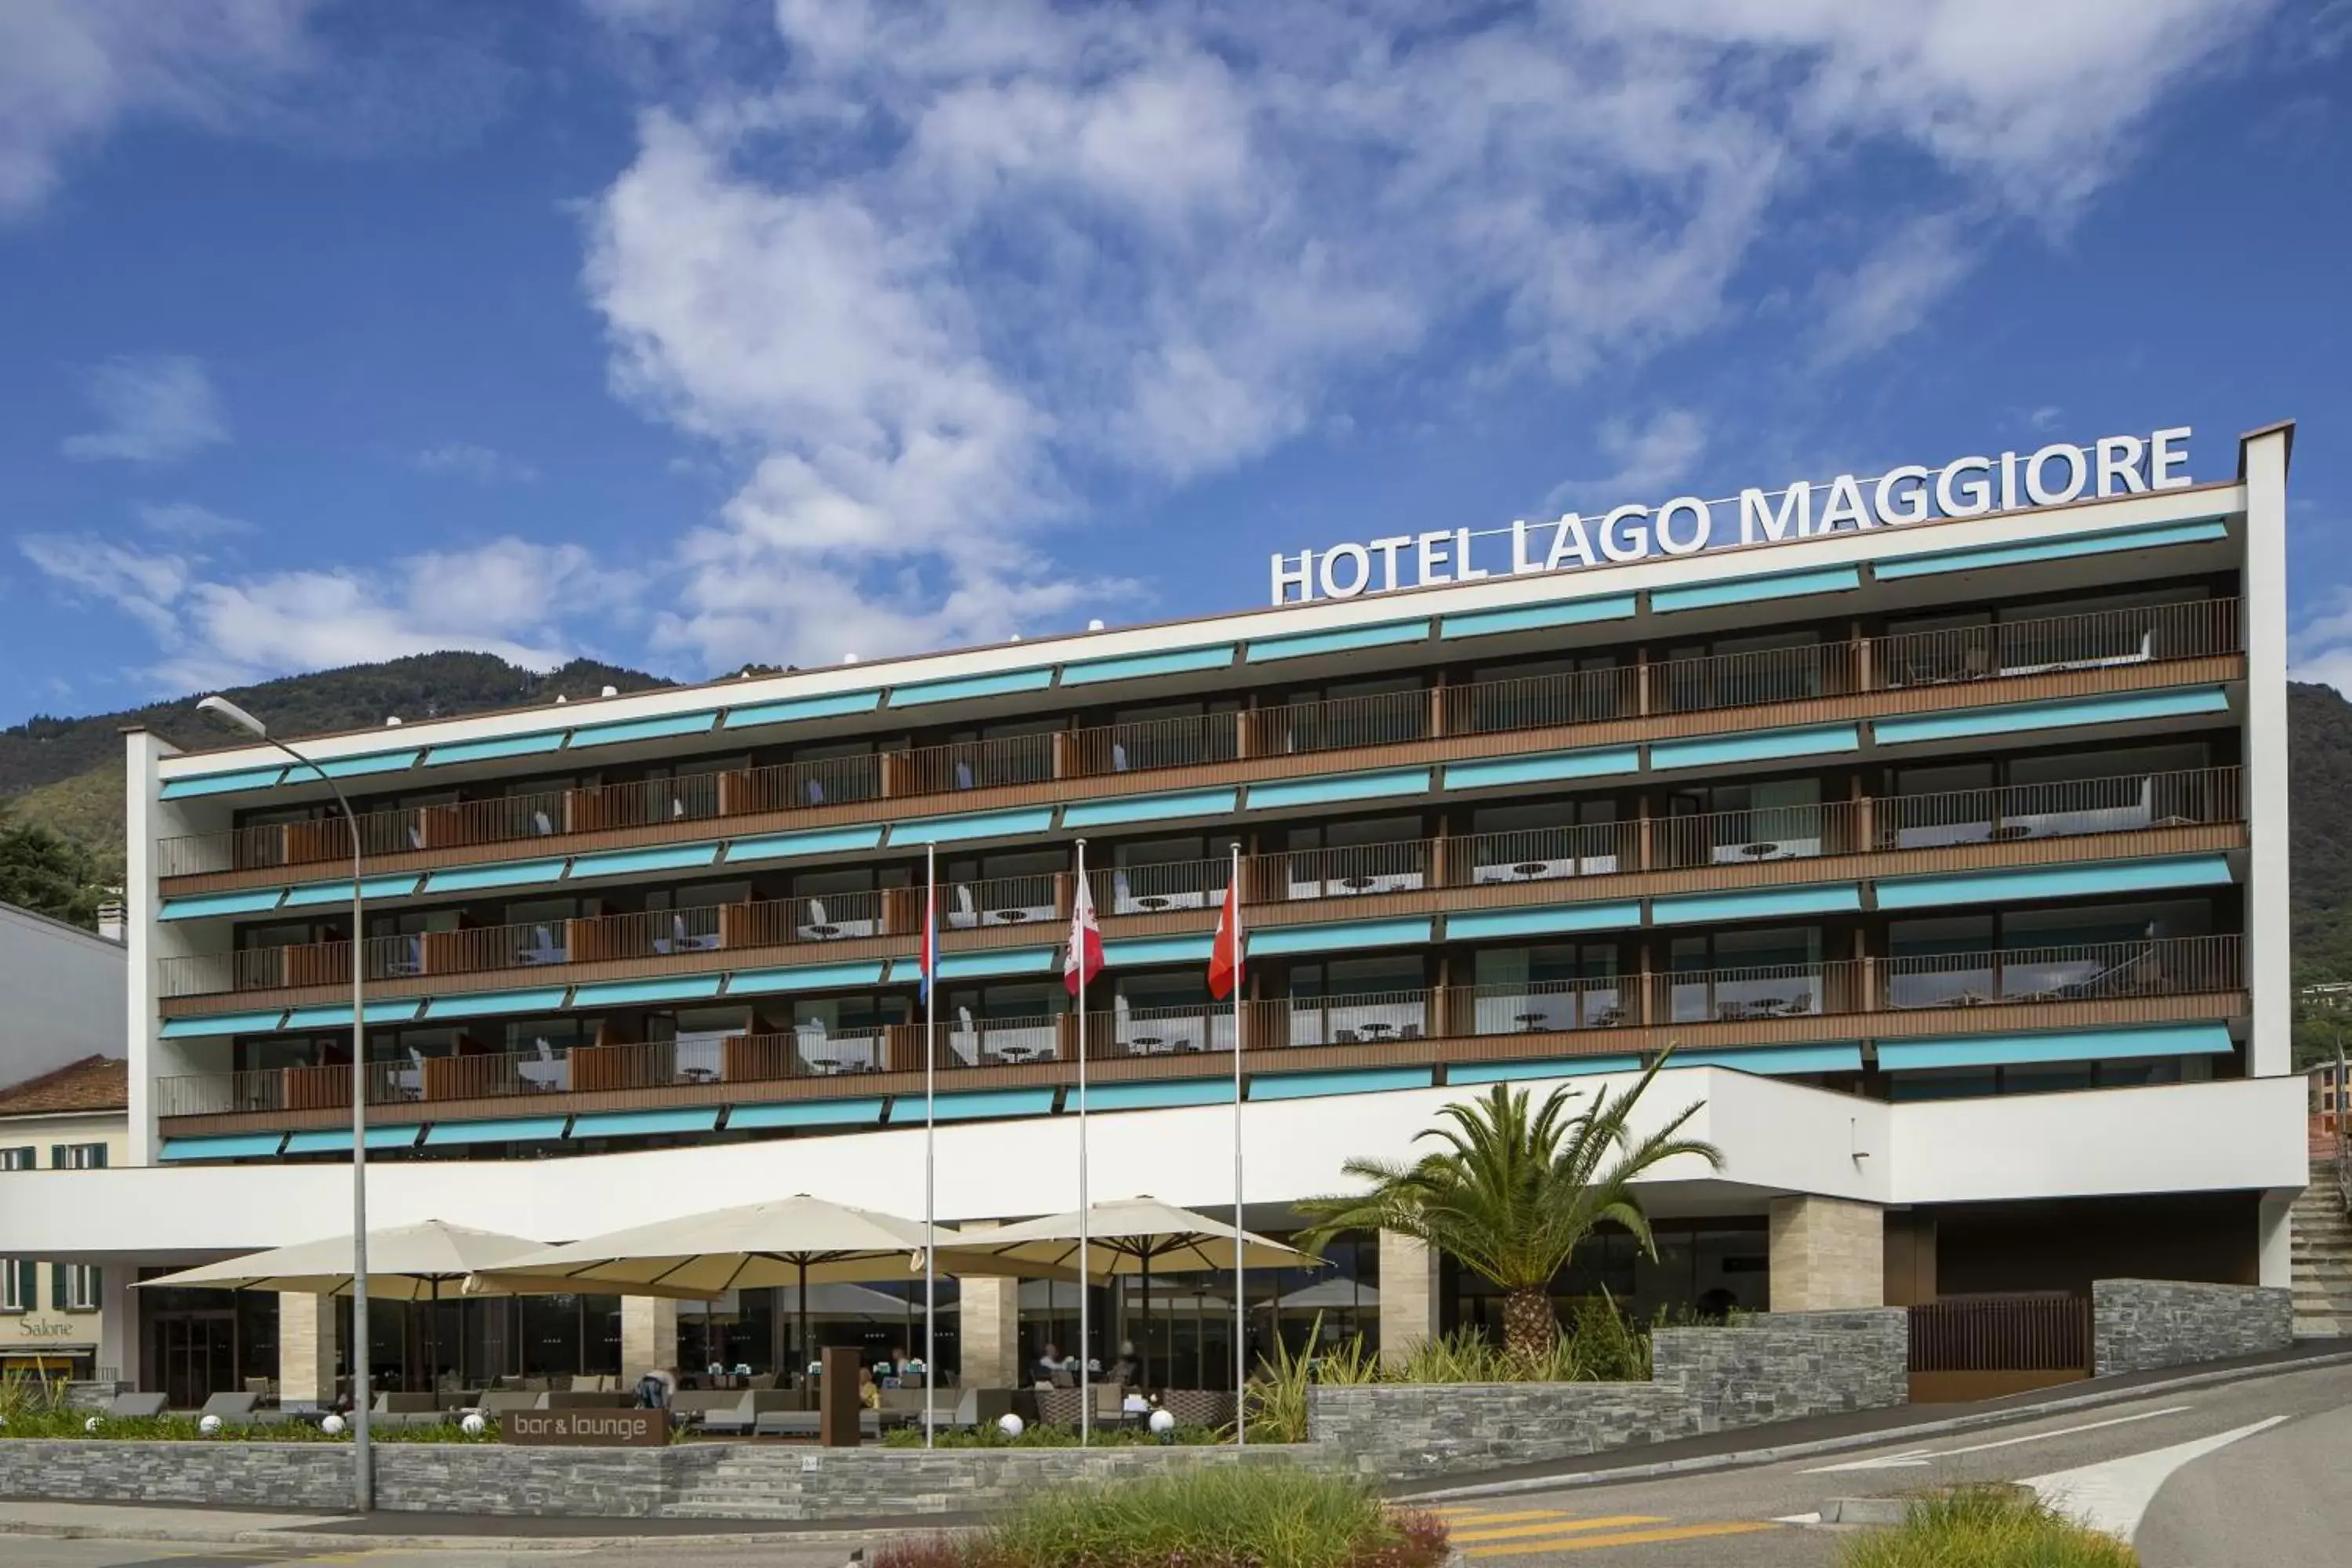 Property building in Hotel Lago Maggiore - Welcome!